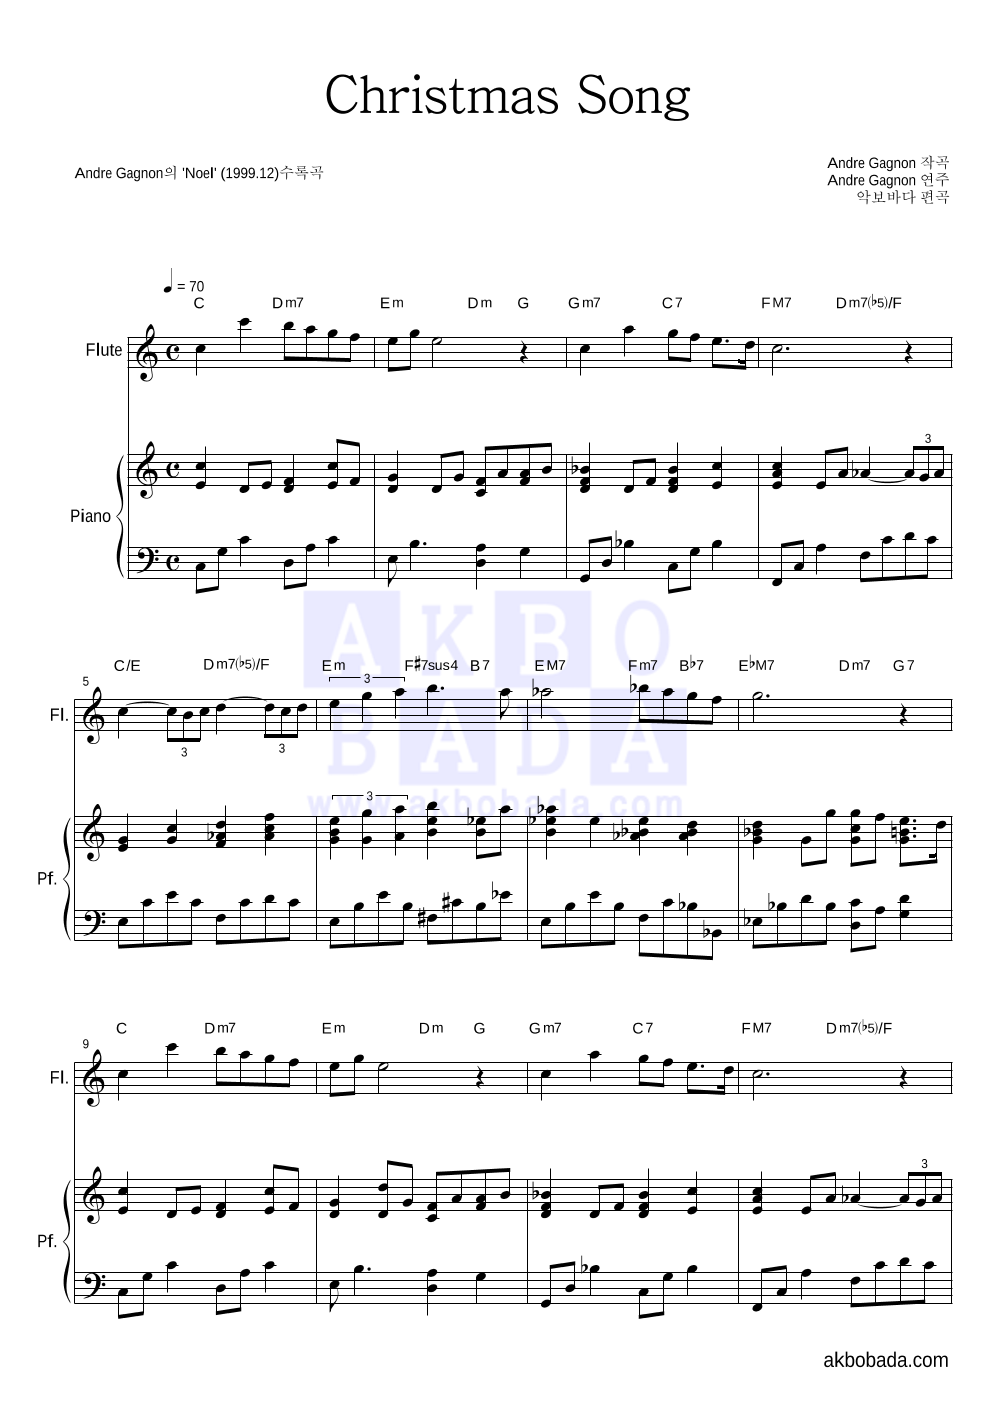 Andre Gagnon - Christmas Song 플룻&피아노 악보 